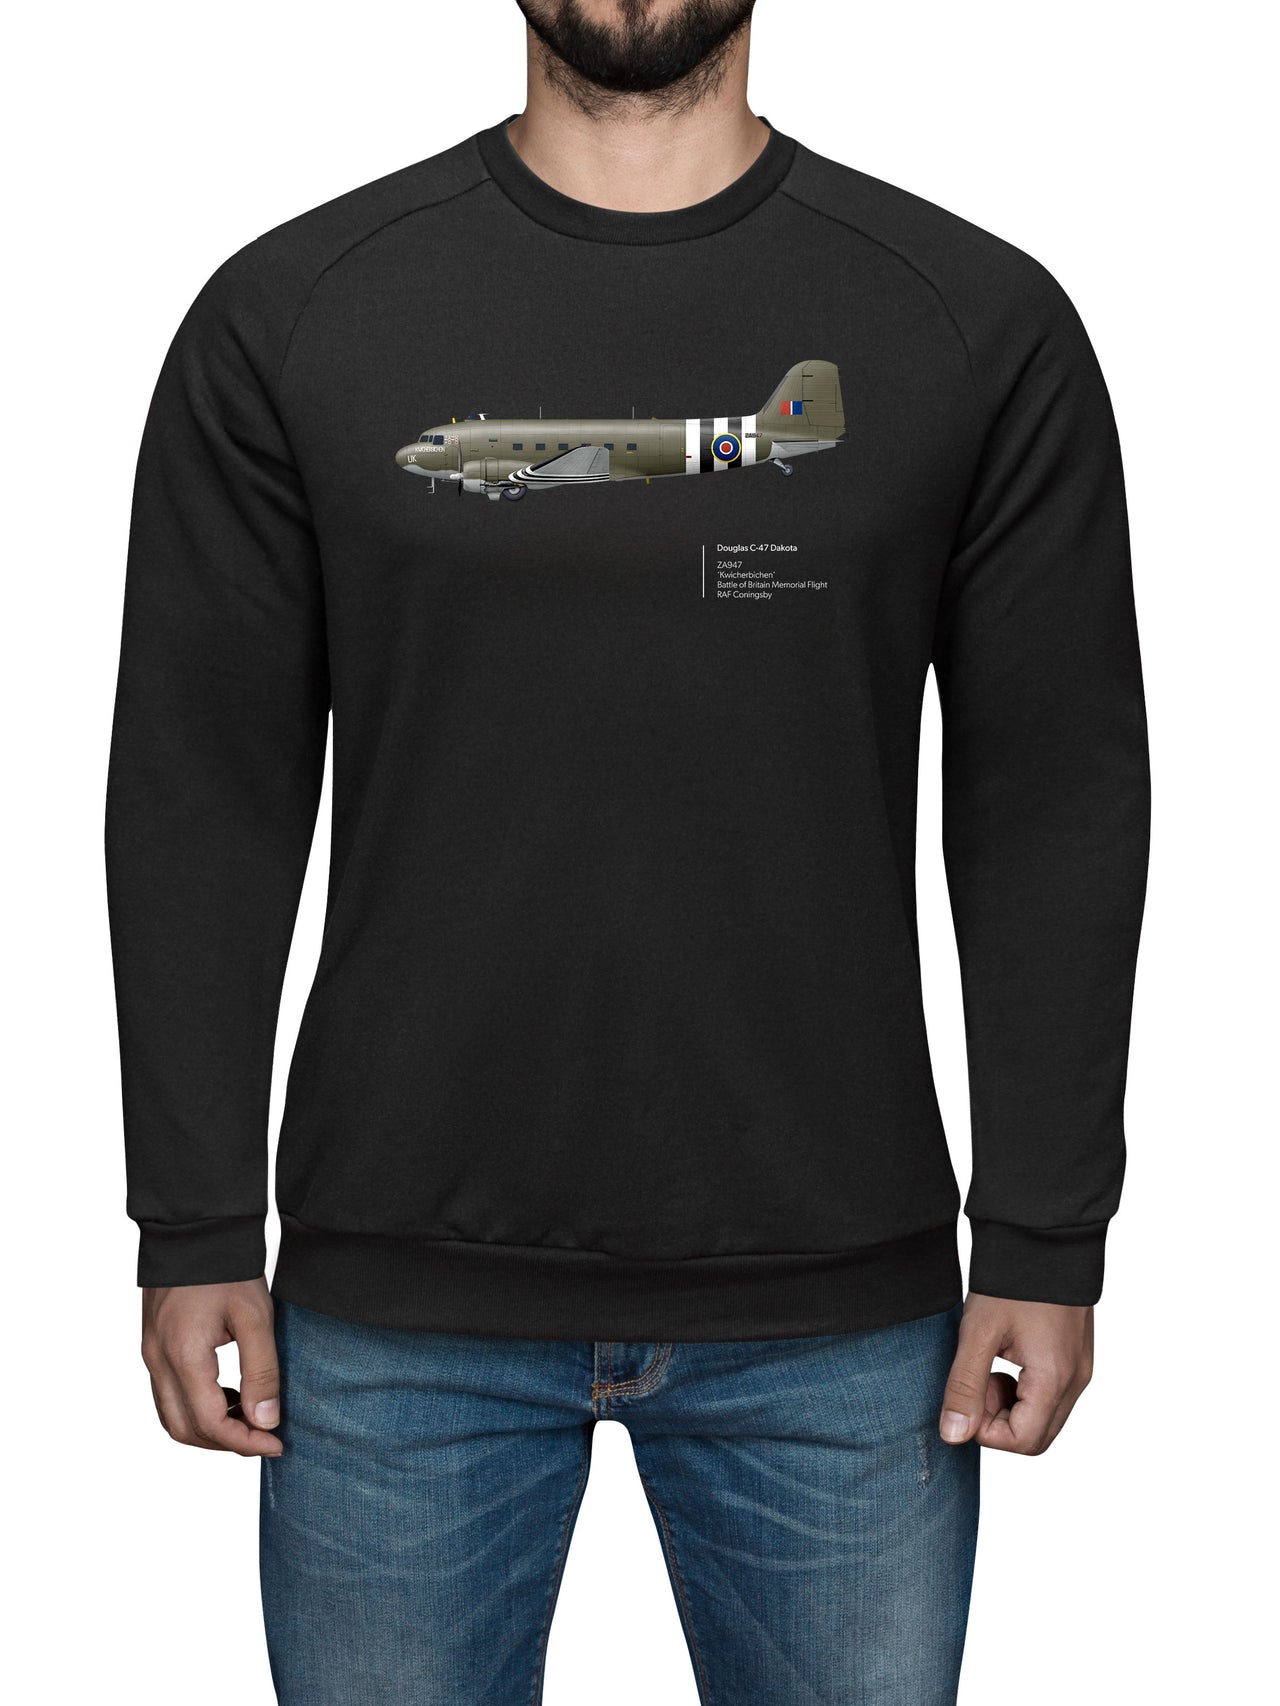 BBMF Douglas C-47 Dakota - Sweat Shirt